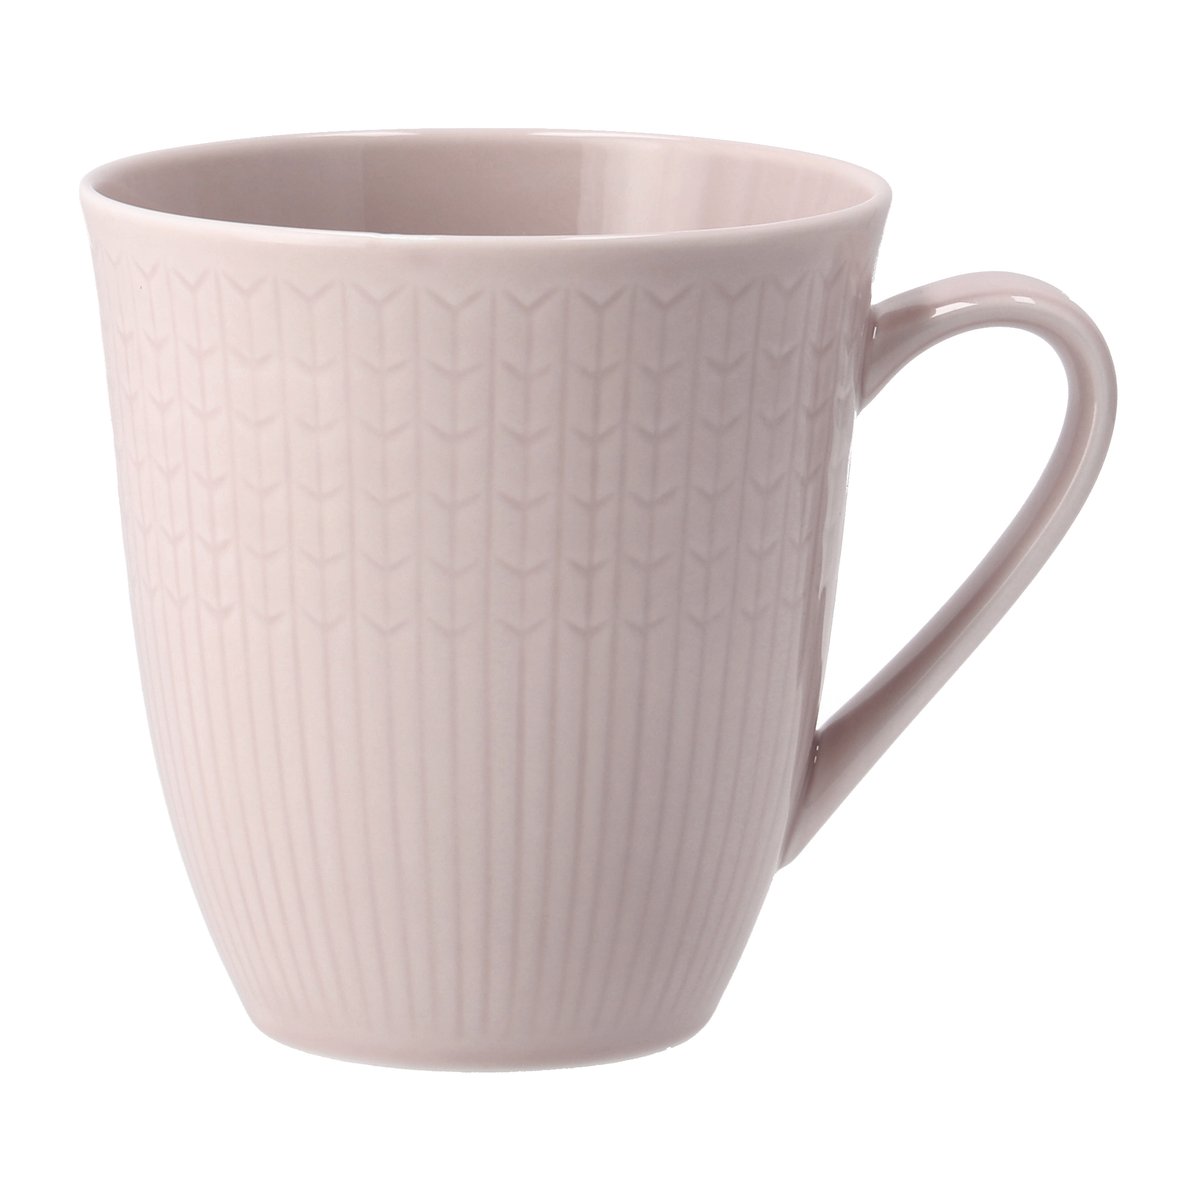 rörstrand mug swedish grace rose